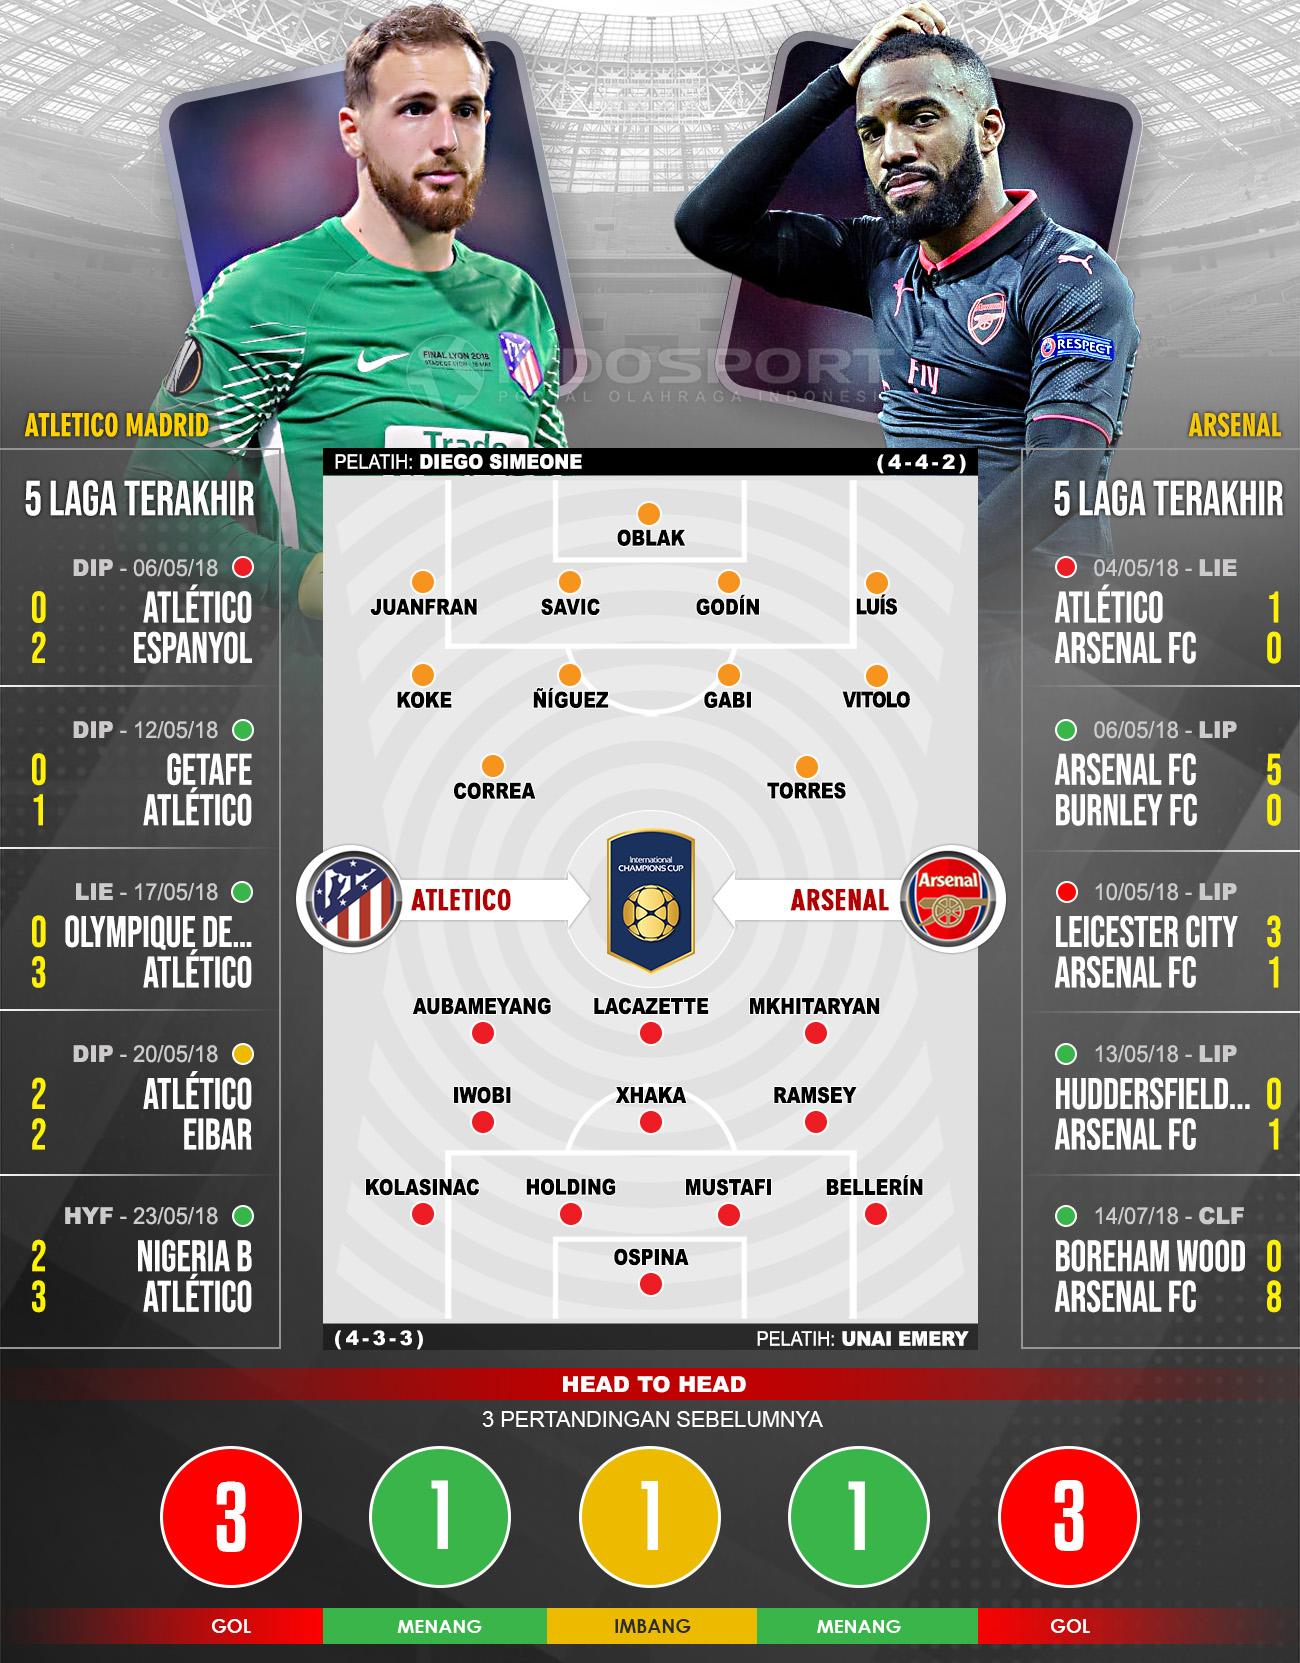 Atletico Madrid vs Arsenal (Susunan Pemain dan Lima Laga Terakhir) Copyright: Indosport.com